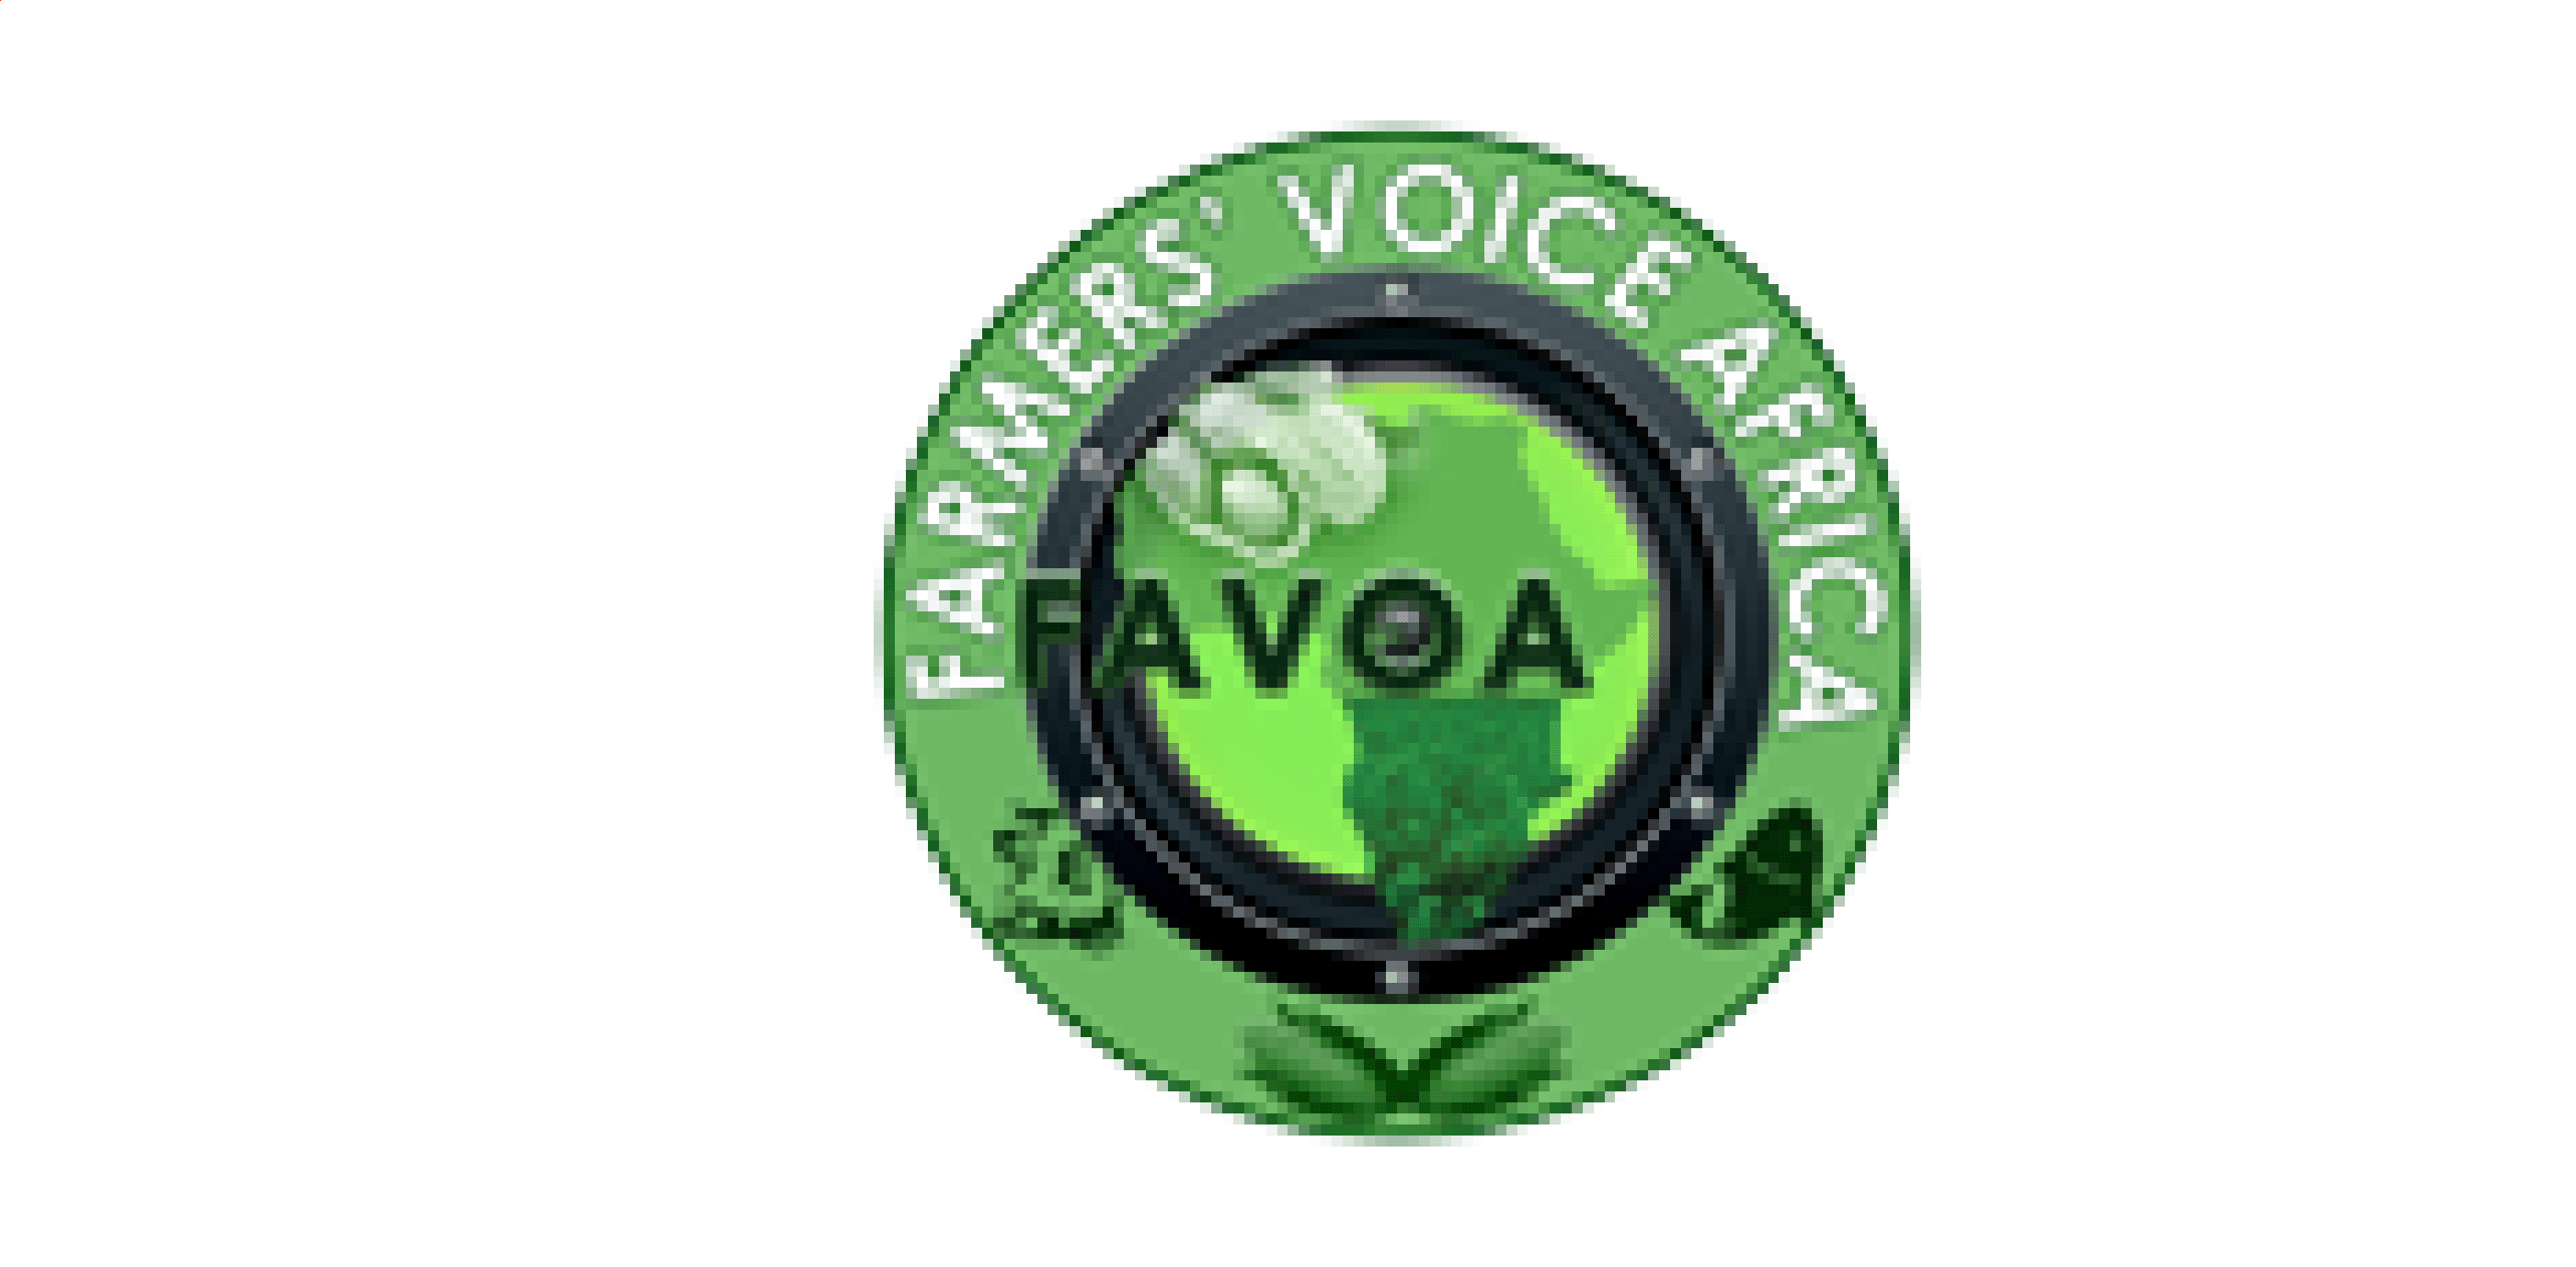 farmers voice africa - favoa